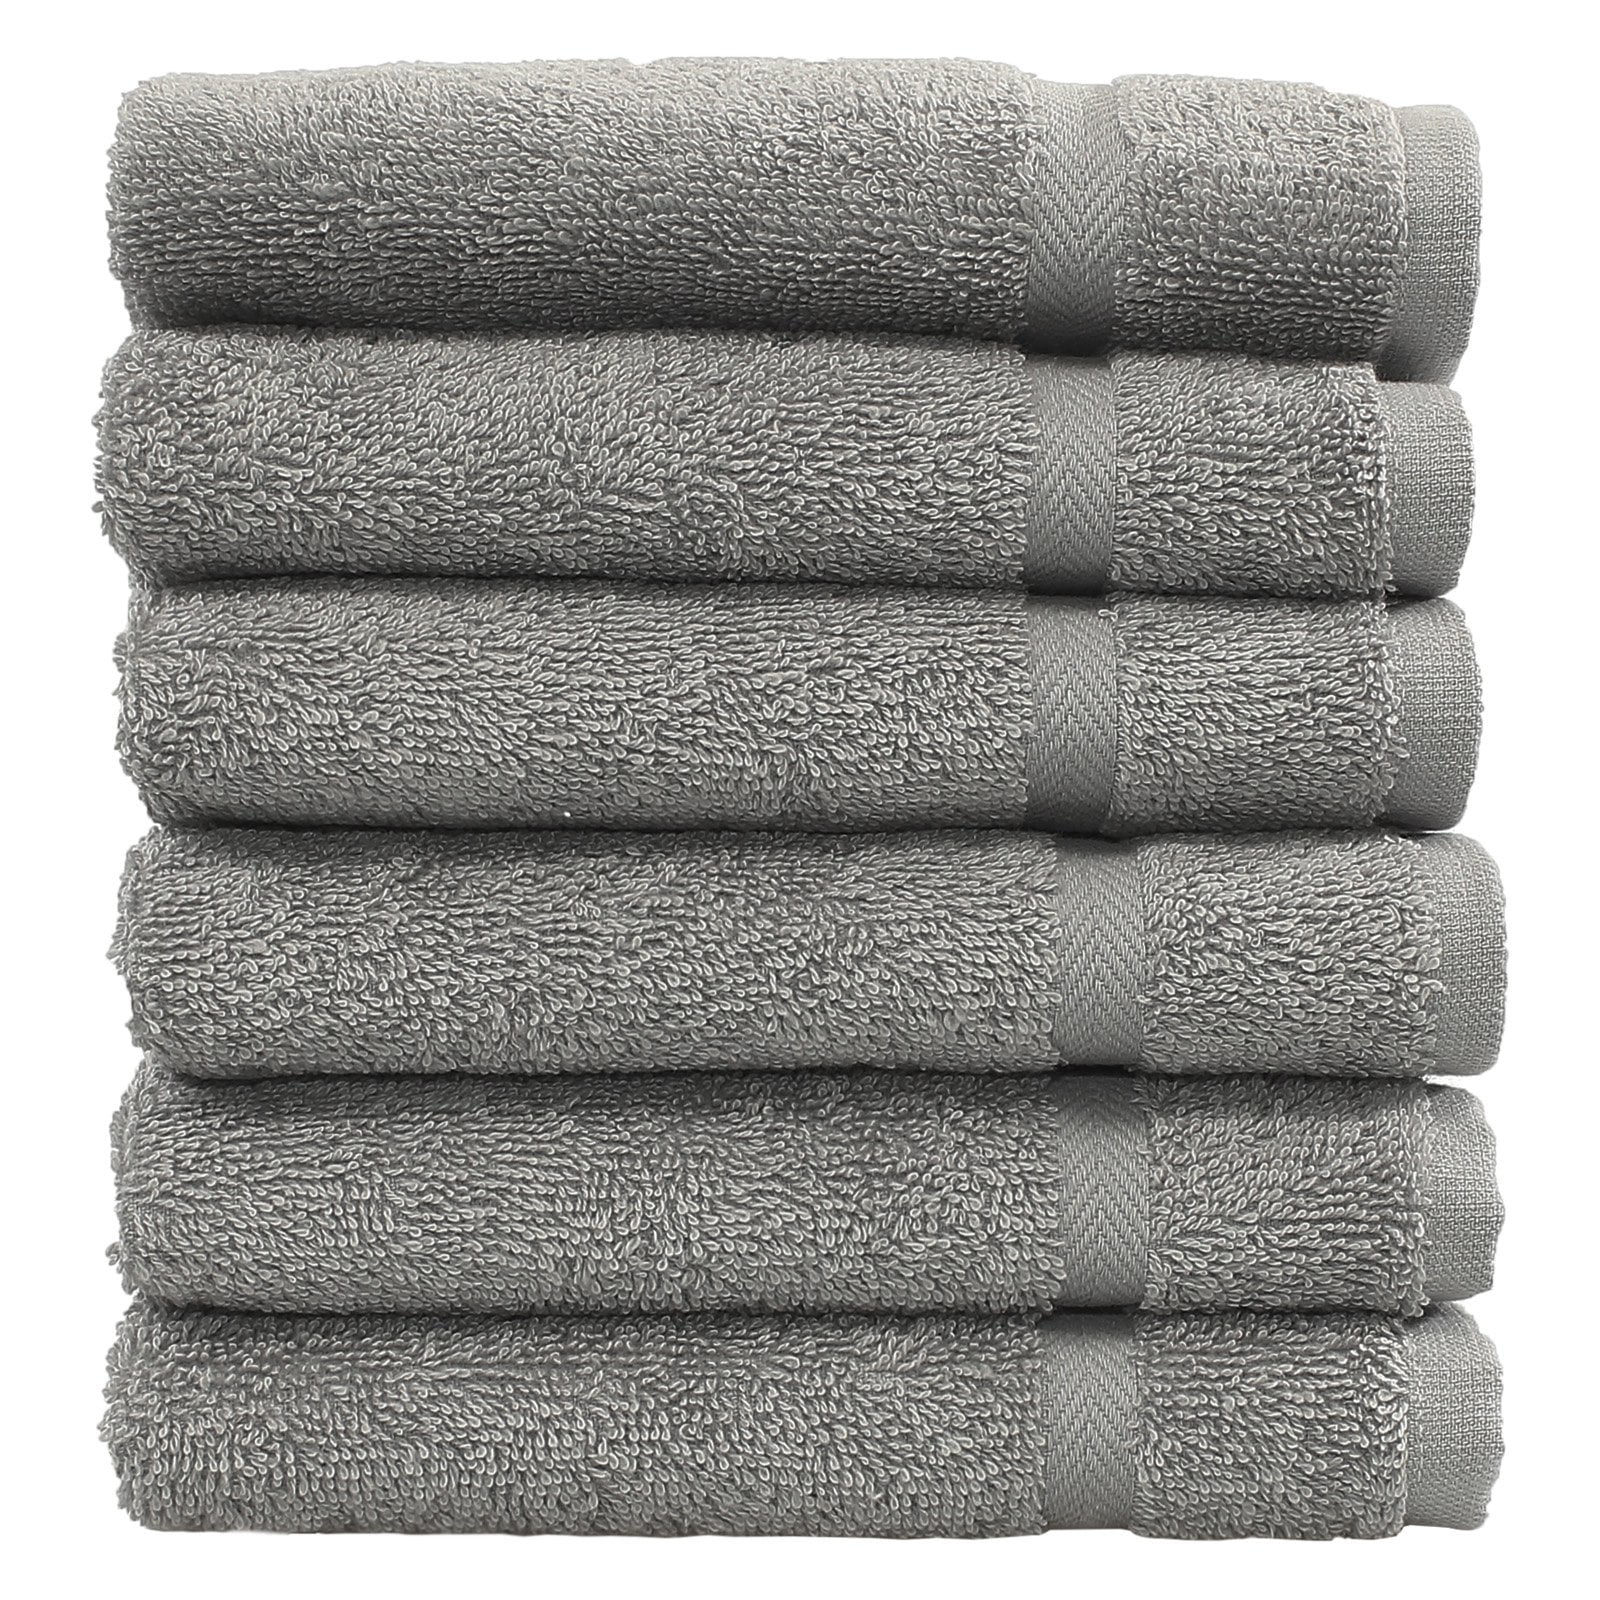 15x25 - Silver Gray Hand Towels Premium Plus 100% Cotton